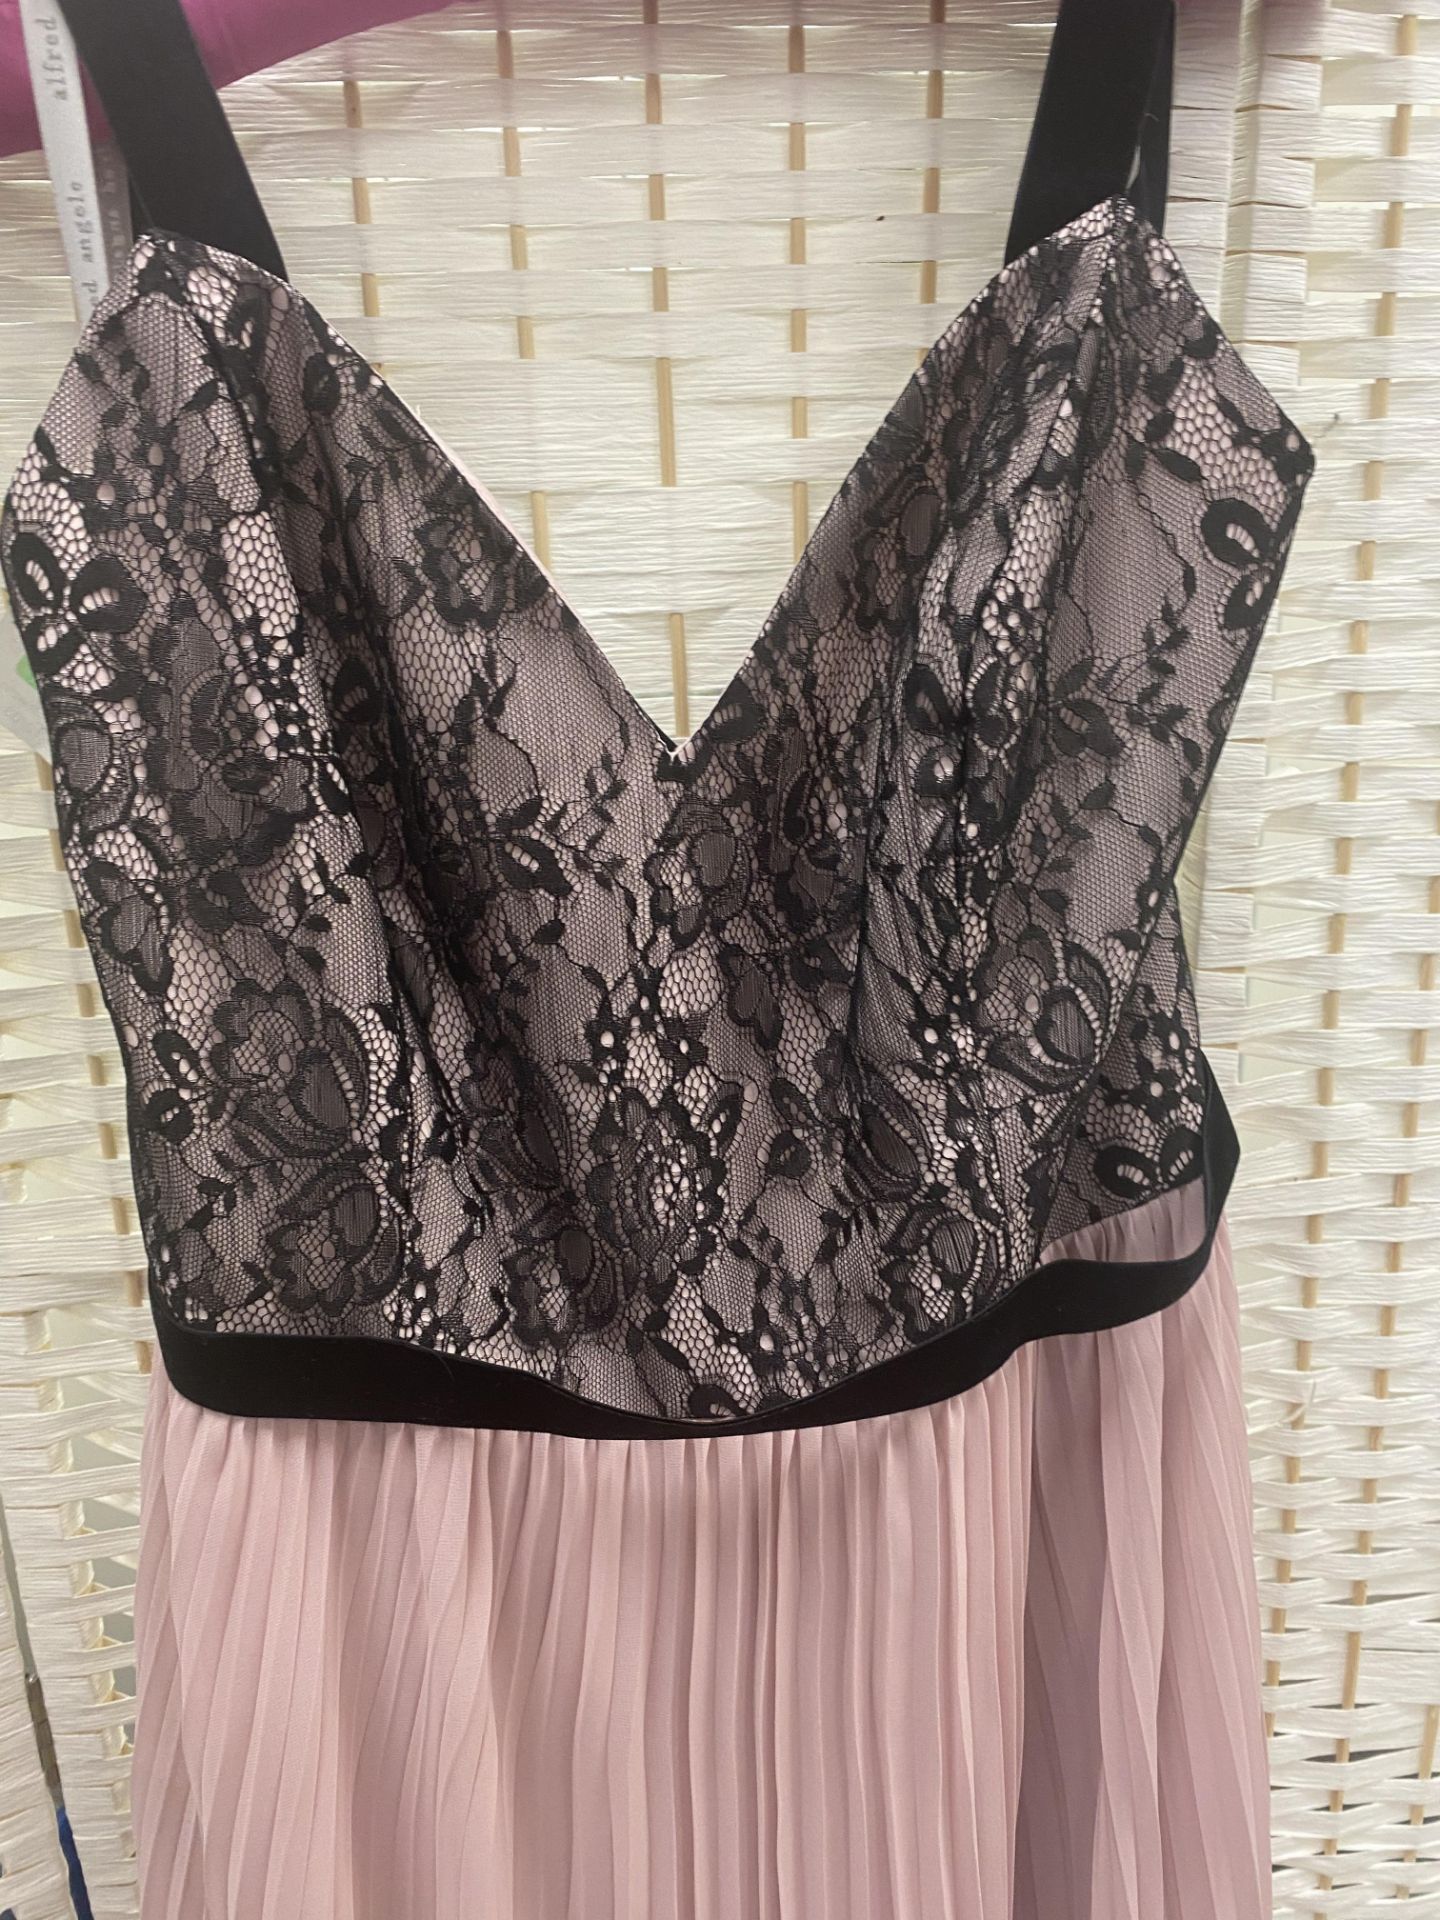 Alfred Angelo prom dress size 16 black lace bodice, blush pink skirt - Bild 4 aus 6